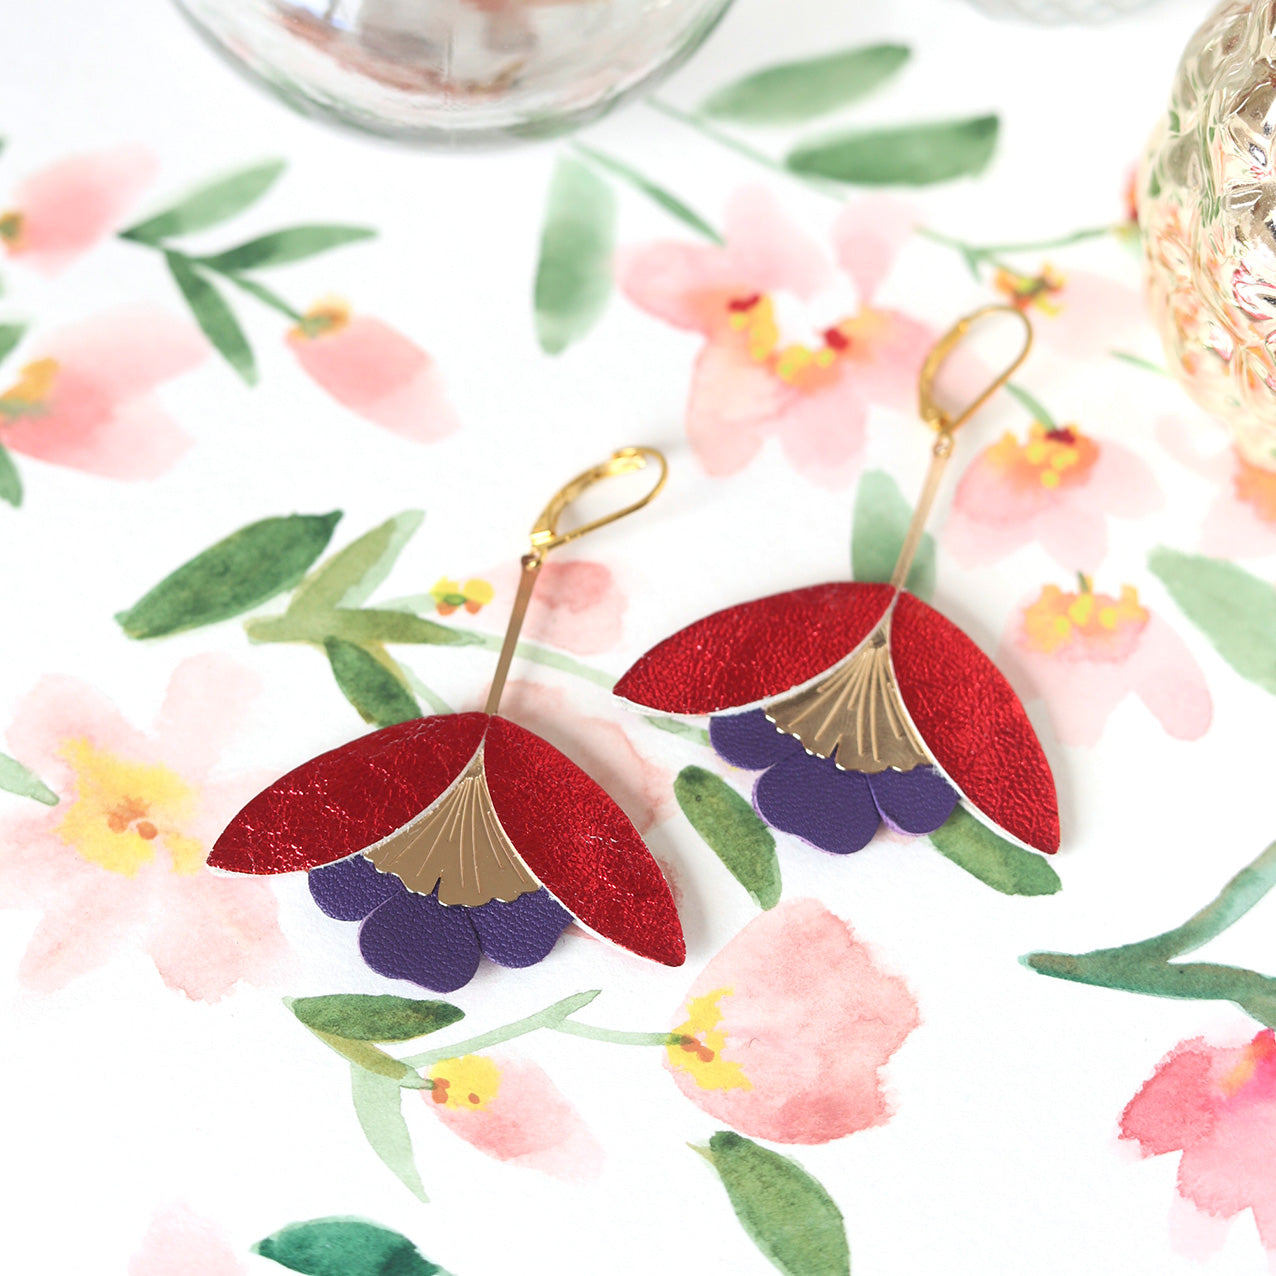 Ginkgo Flower earrings in metallic red leather and iris purple